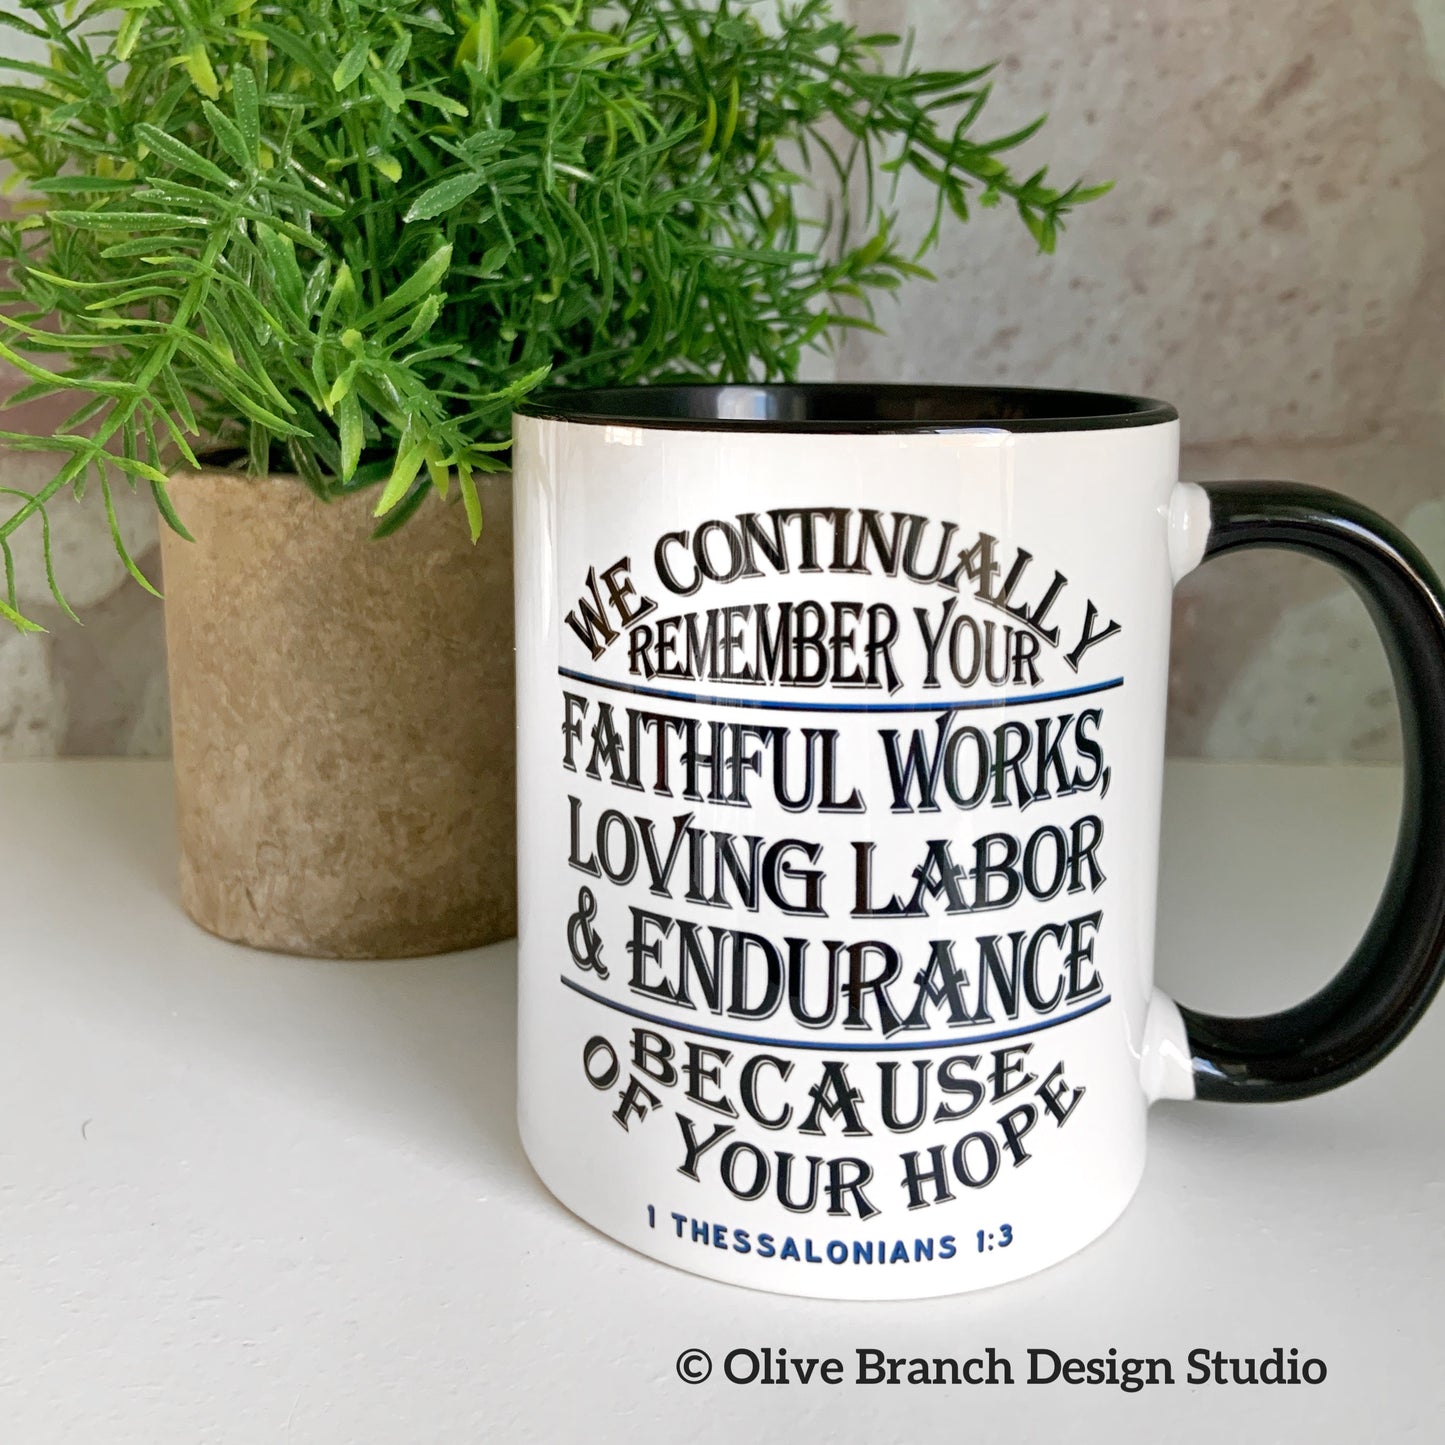 We Continually Remember Your Faithful Works Mug